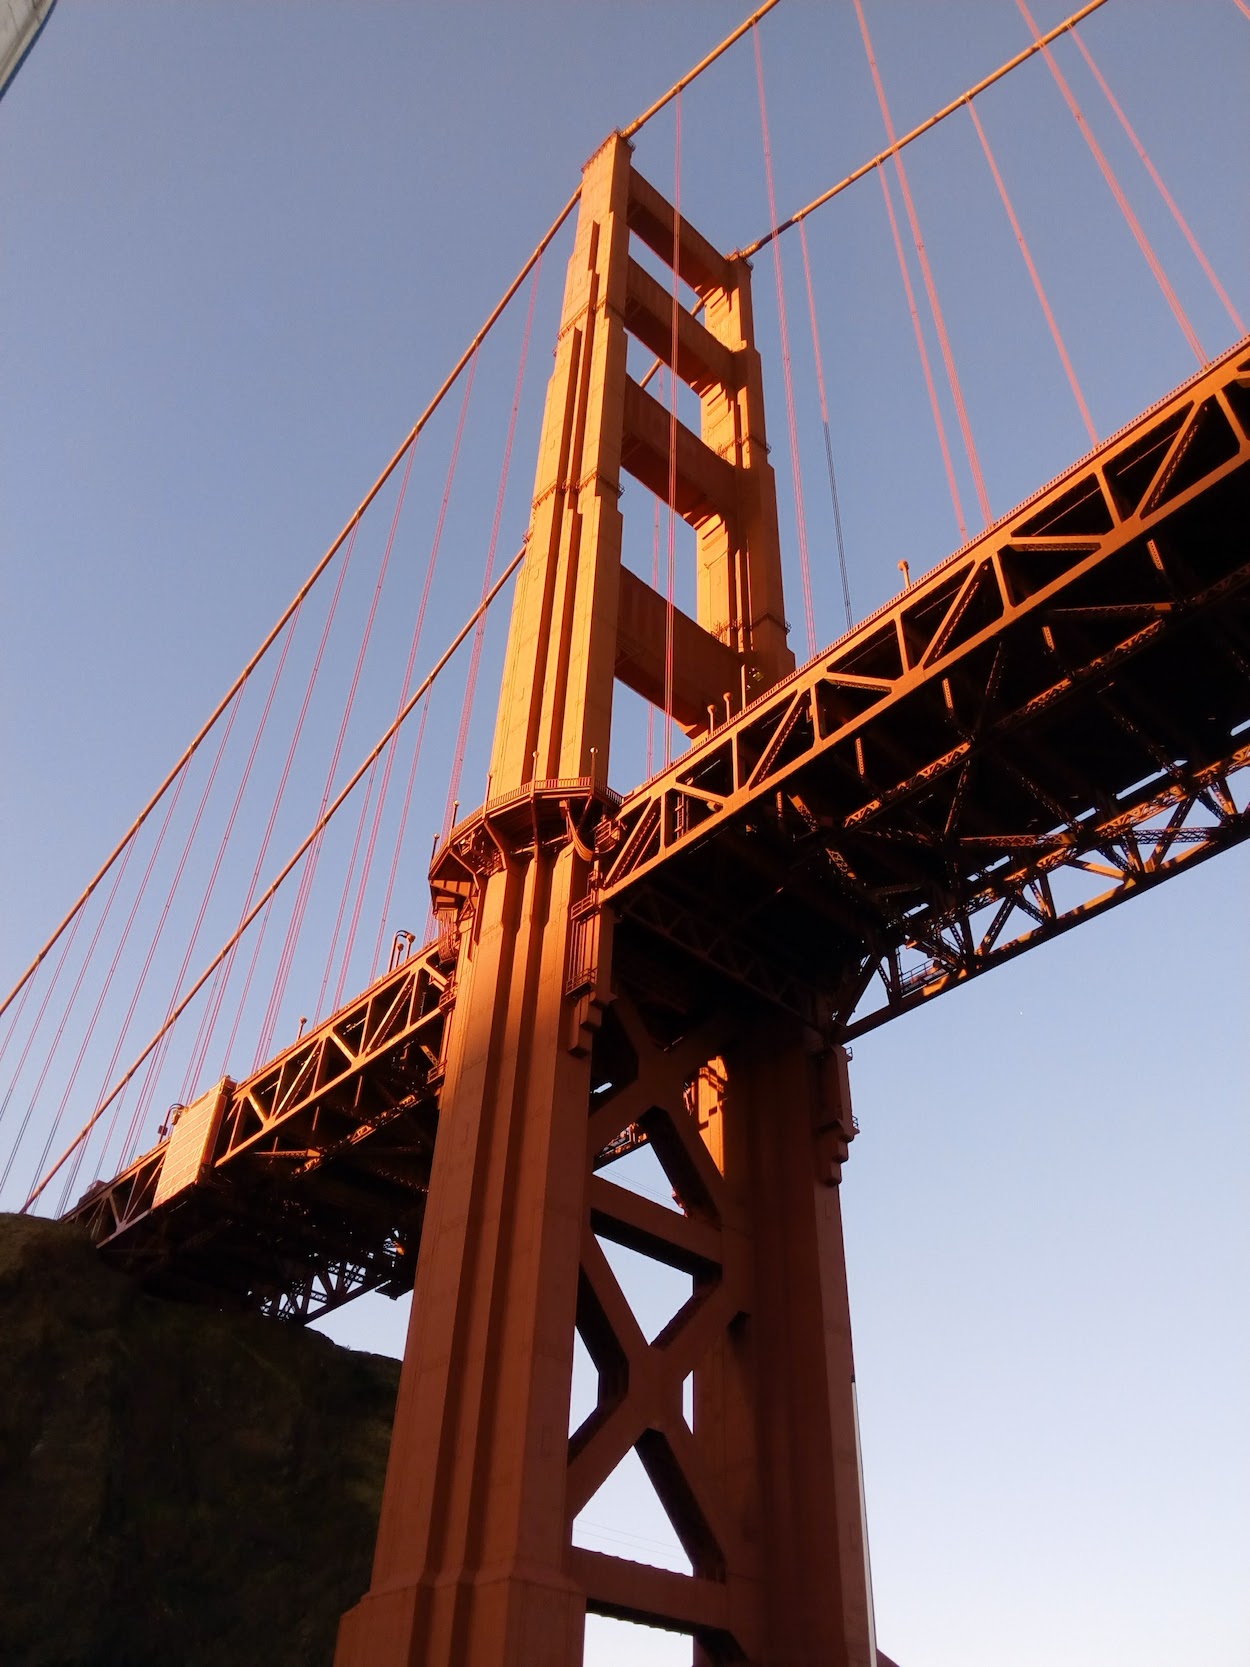 San Francisco Bay Area - Under Golden Gate